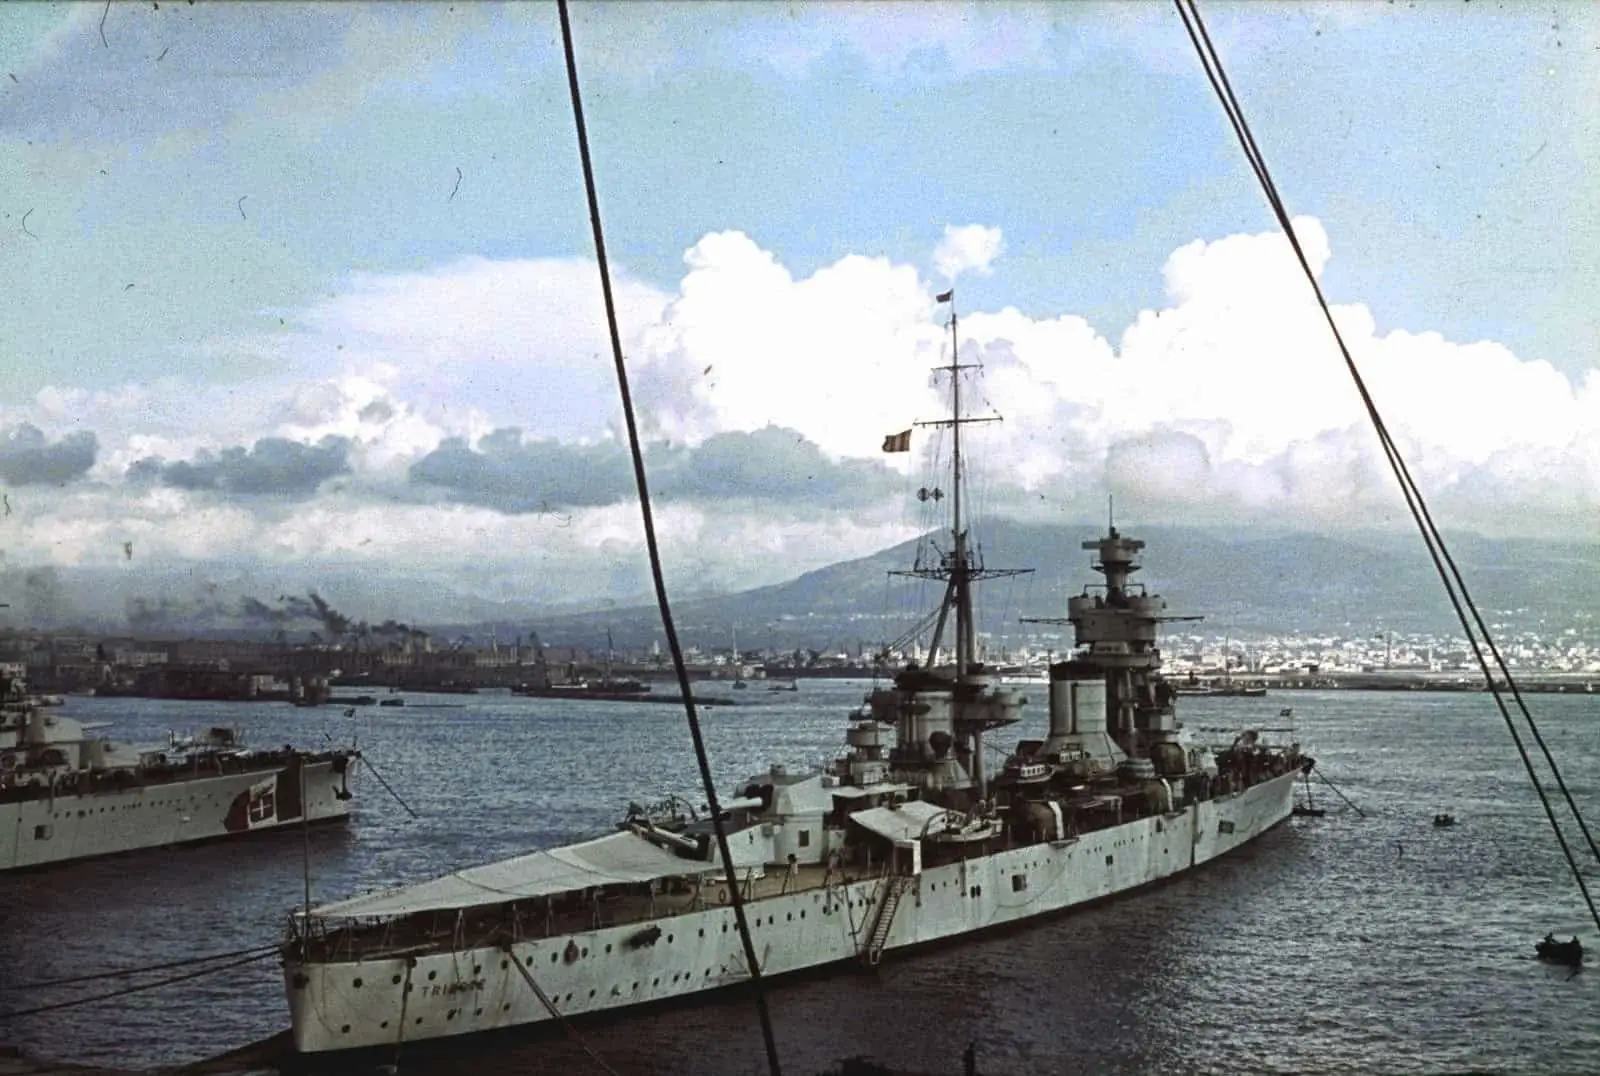 regia marina oob. The Trento class cruiser Trieste moored in Naples, Italy.